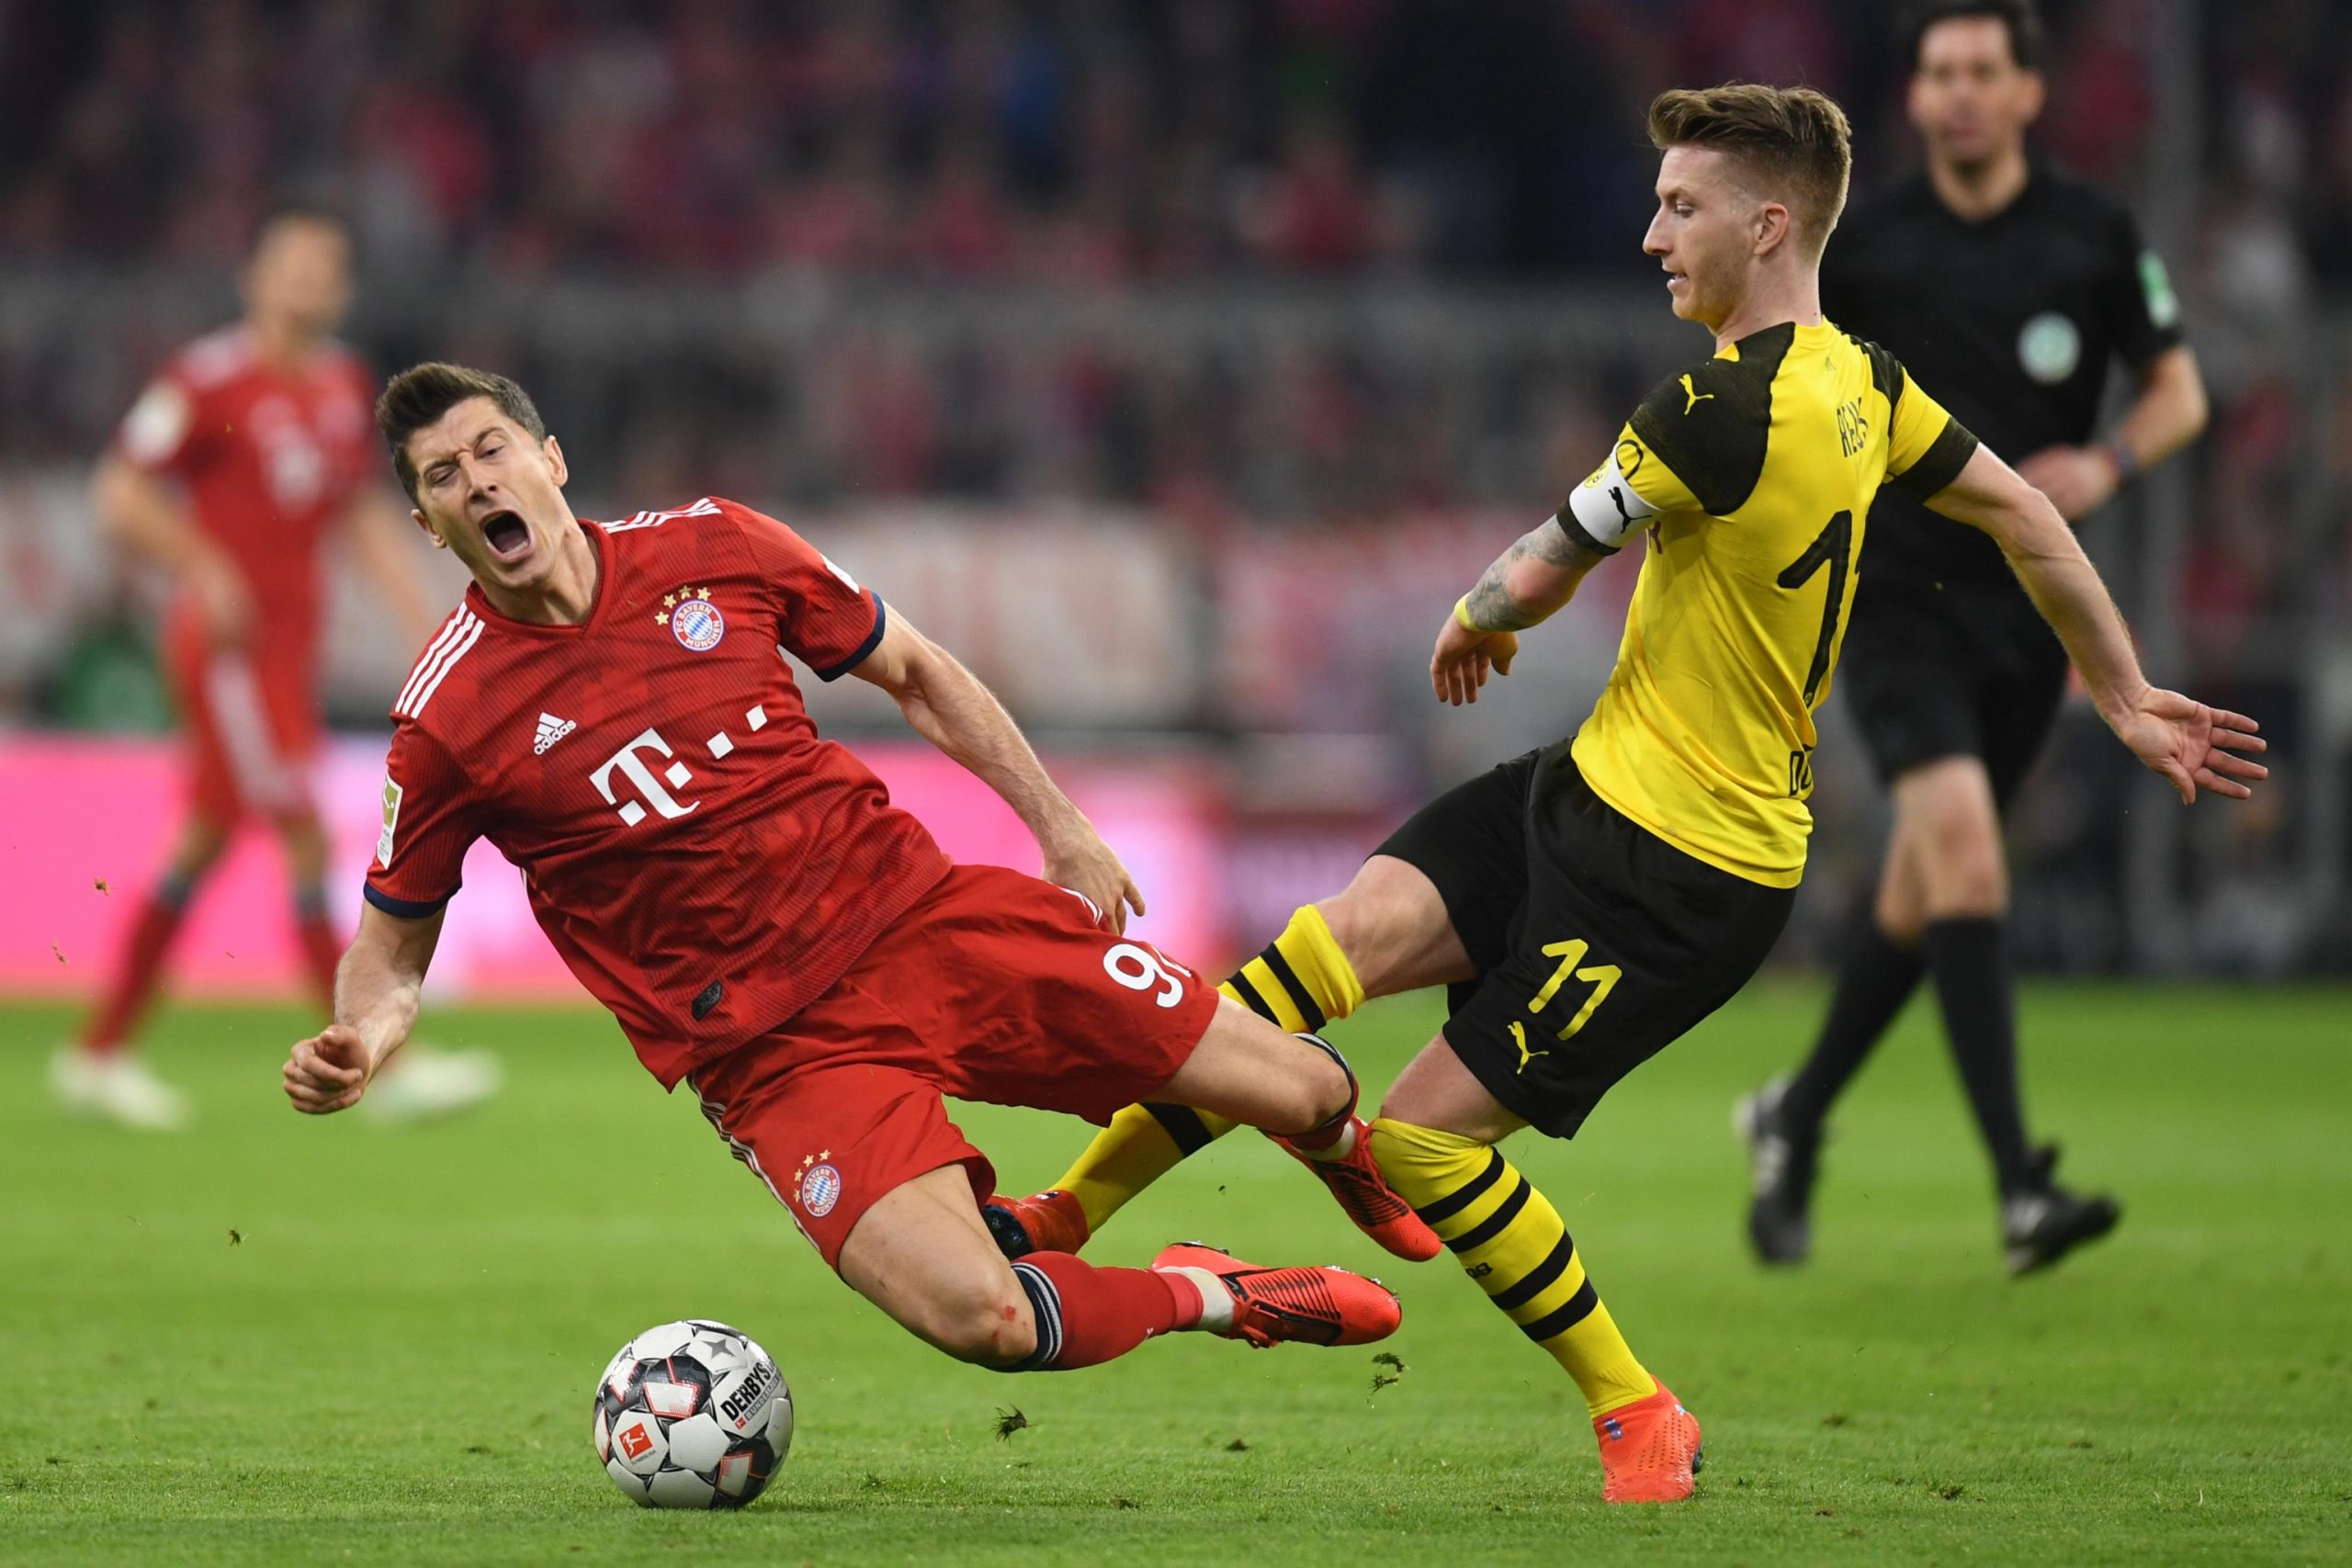 Borussia Dortmund vs Bayern München: How to Watch Online Live Stream